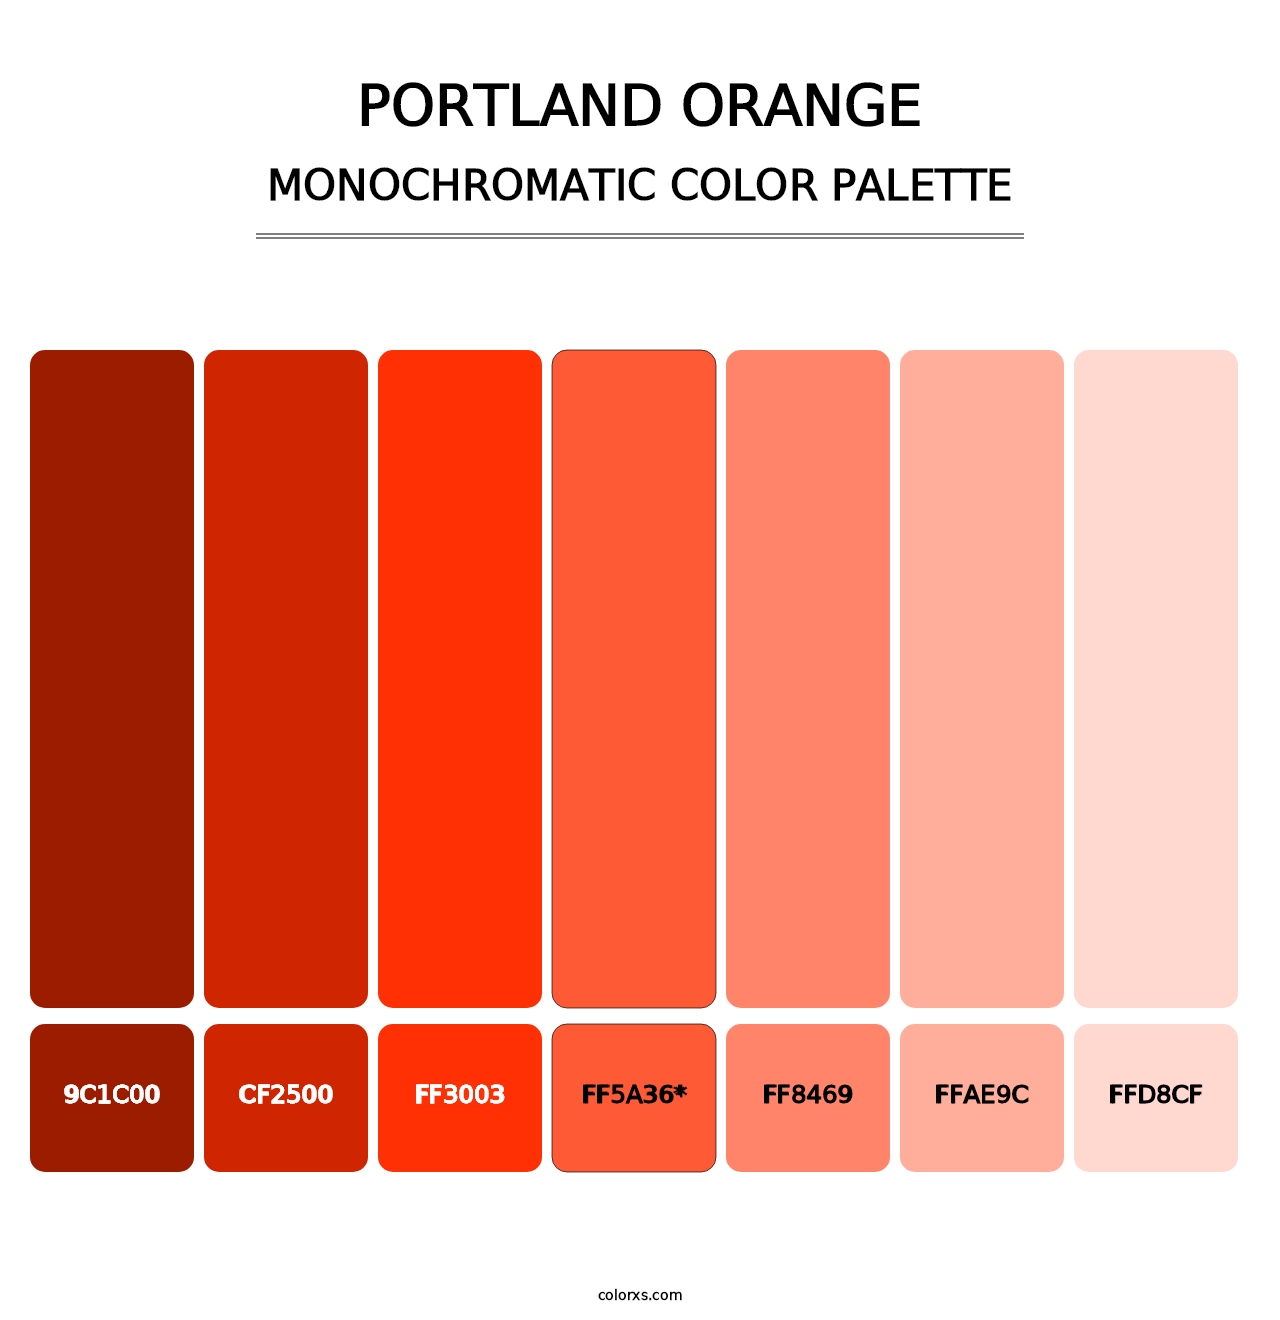 Portland Orange - Monochromatic Color Palette